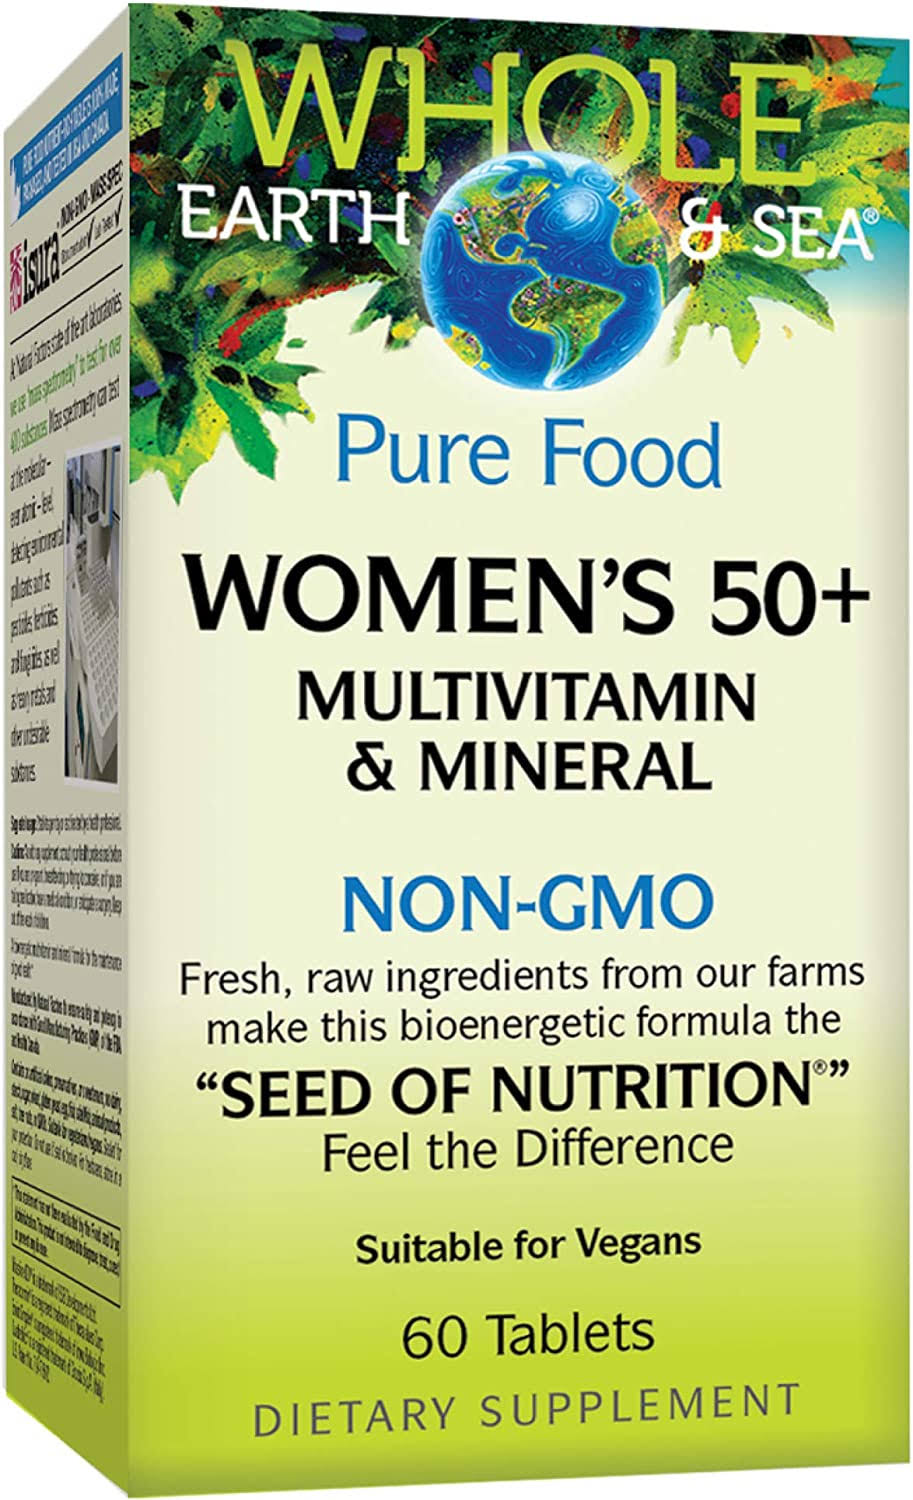 Whole Earth & Sea Women's 50+ Multivitamin & Mineral 120 Tablets